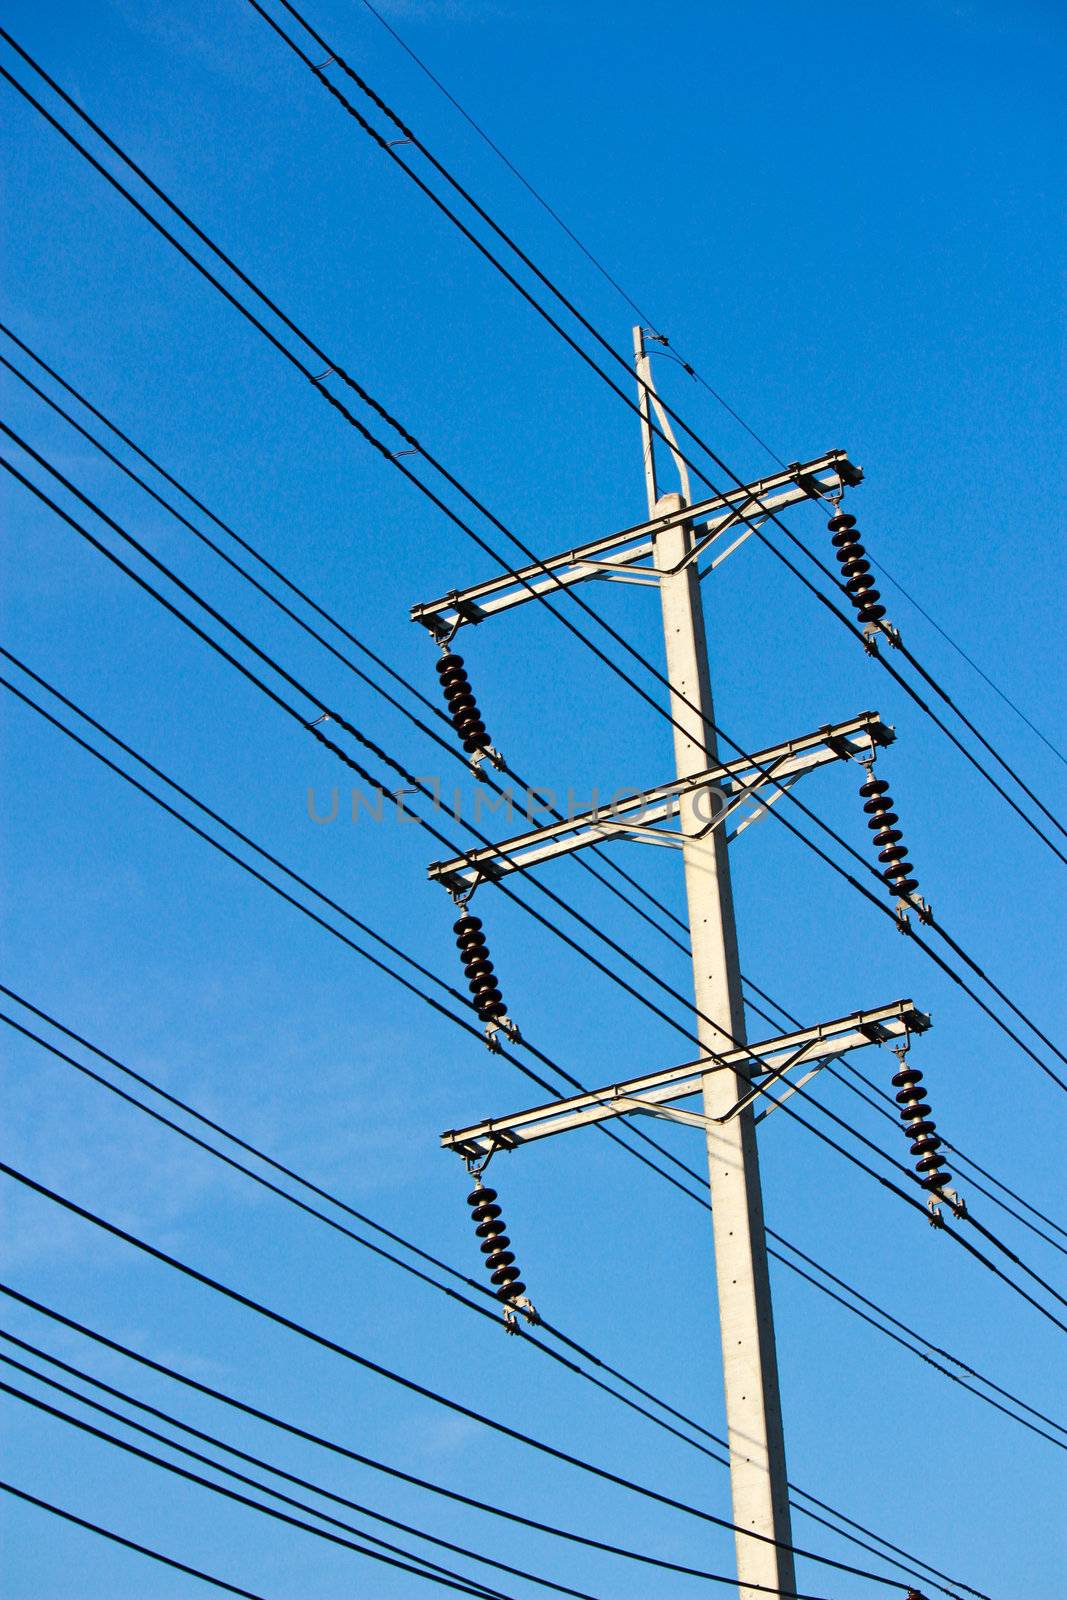 electricity post in blue sky by bajita111122